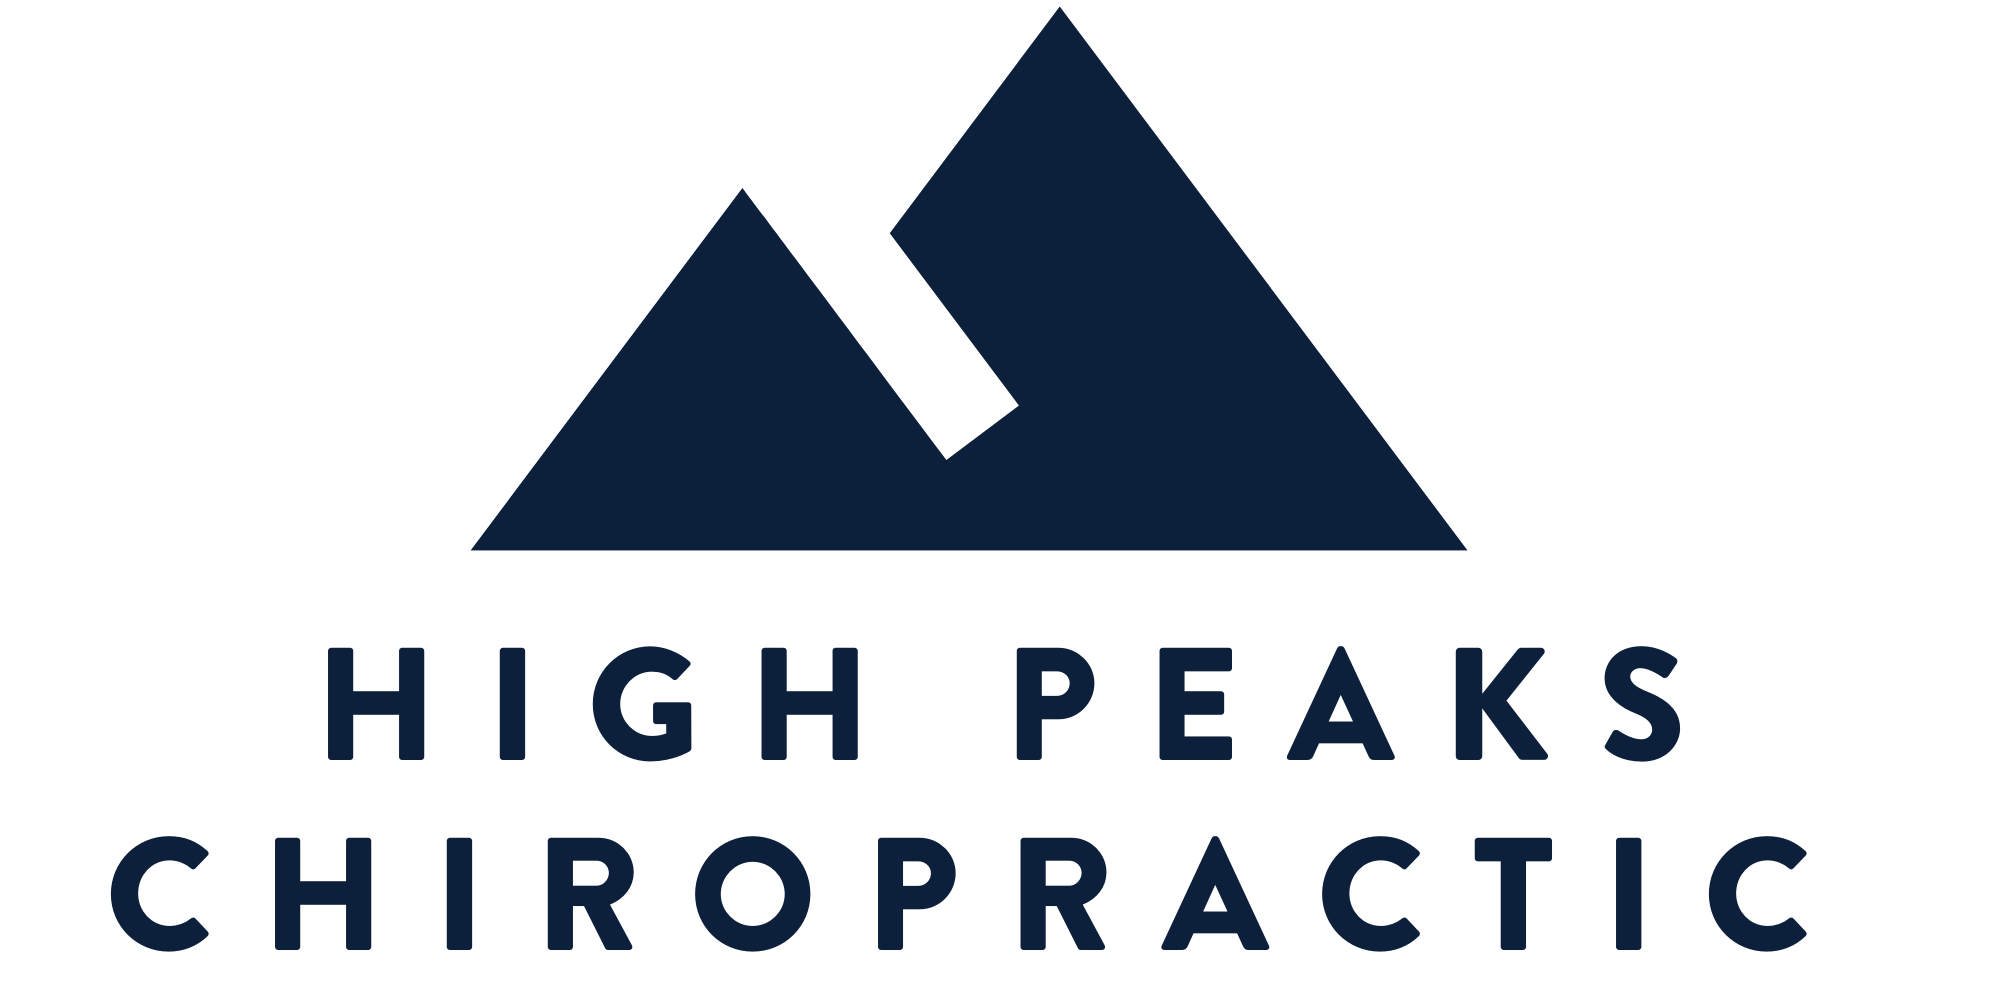  High Peaks Chiropractic